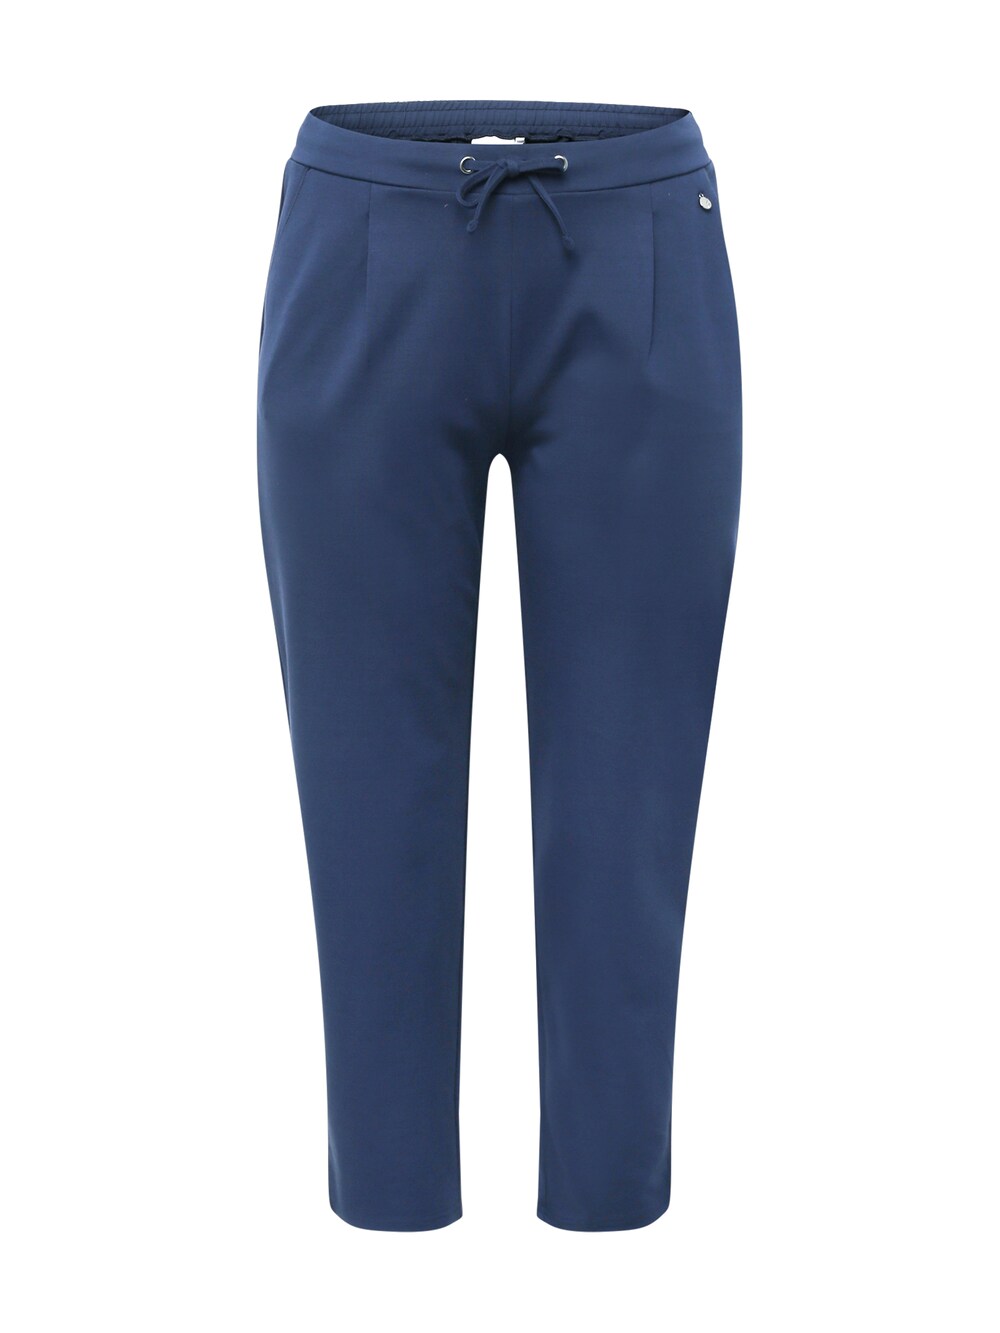 Узкие брюки со складками спереди Fransa Curve STRETCH, темно-синий платье fransa frbecardi 2 синий